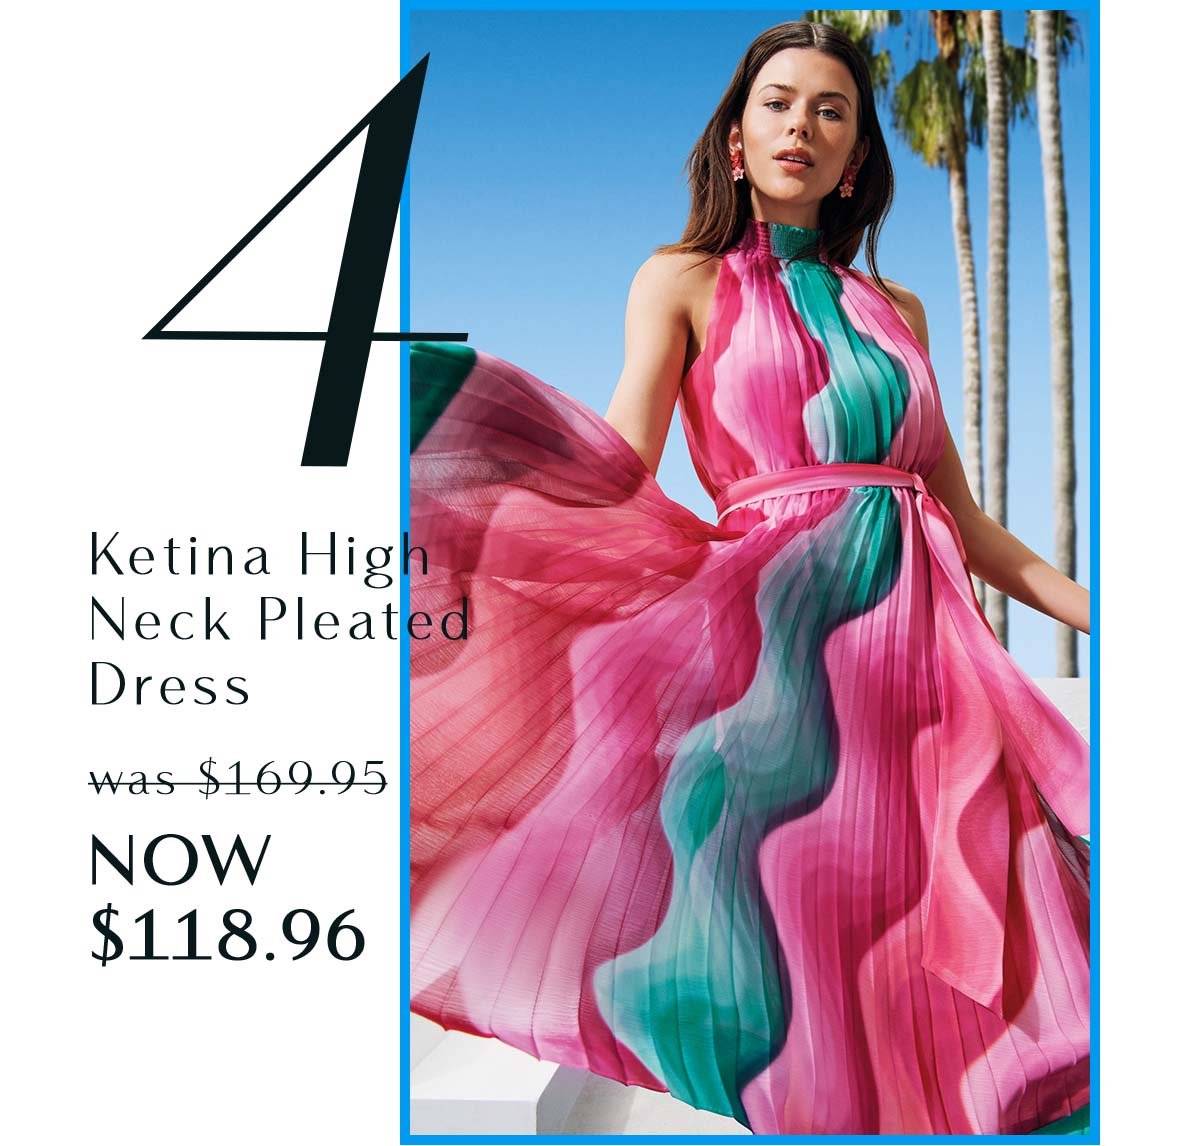 4. Ketina High Neck Pleated Dress  was $169.95 NOW $118.96